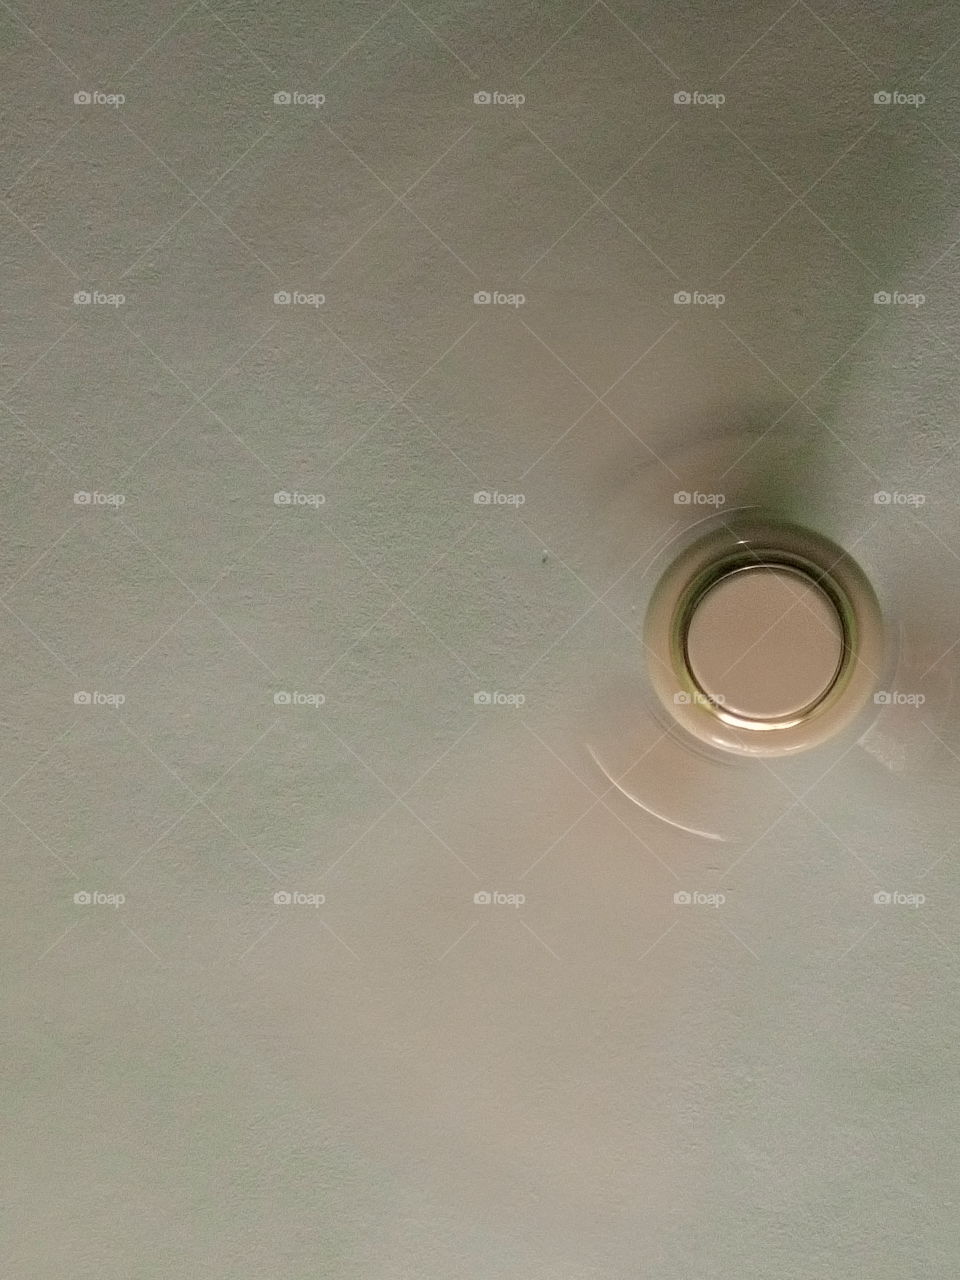 Rotating ceiling fan